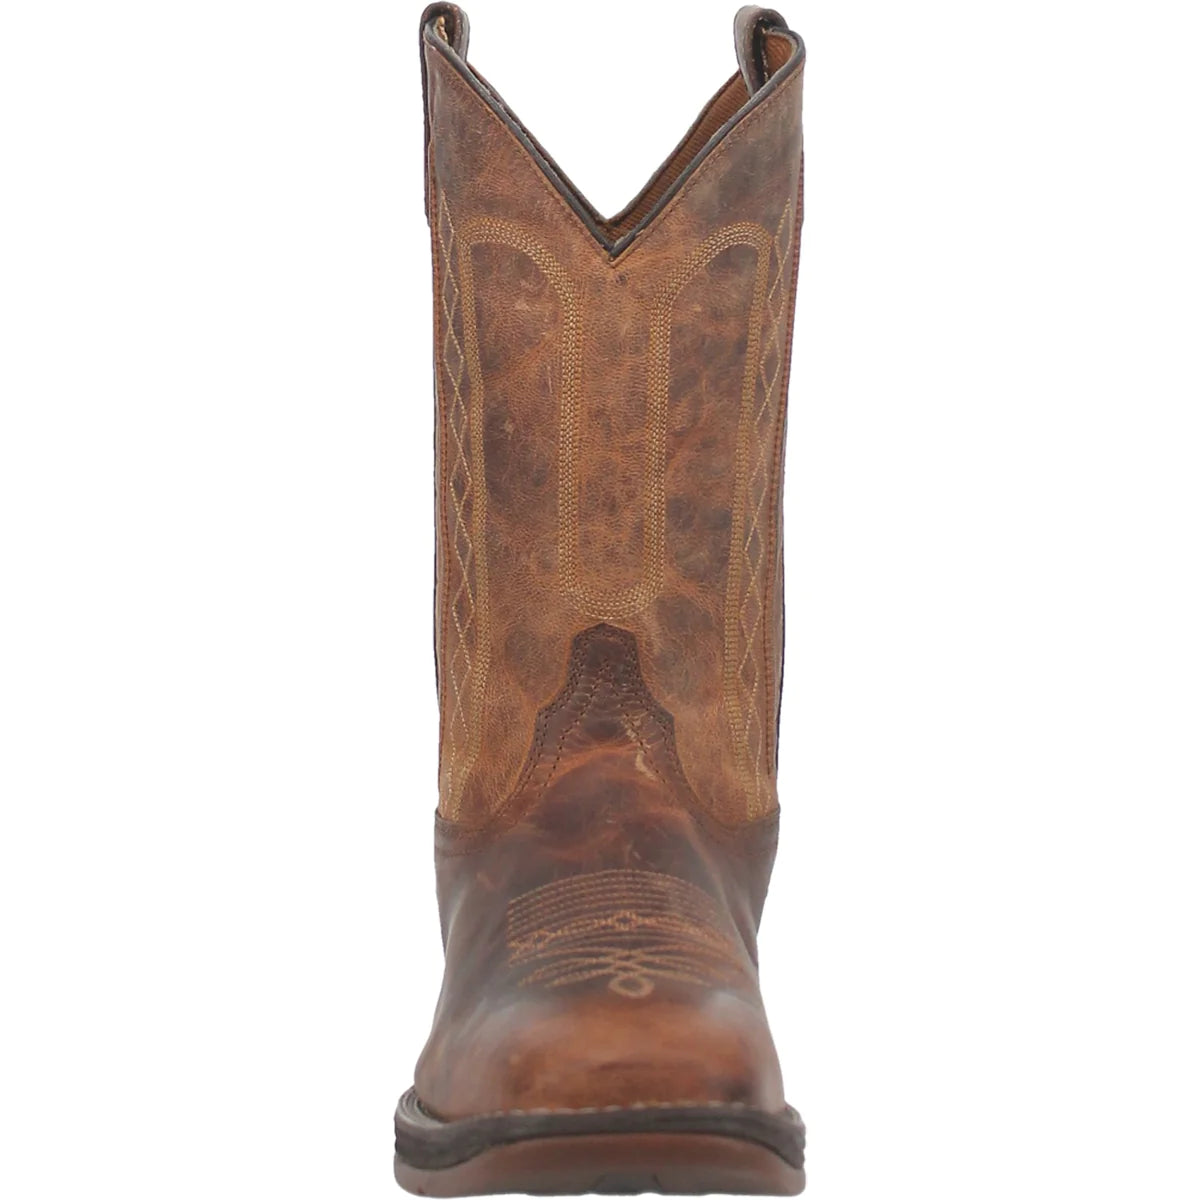 Laredo Men’s Bennett Tan Leather Boots-CLEARANCE-NO RETURNS